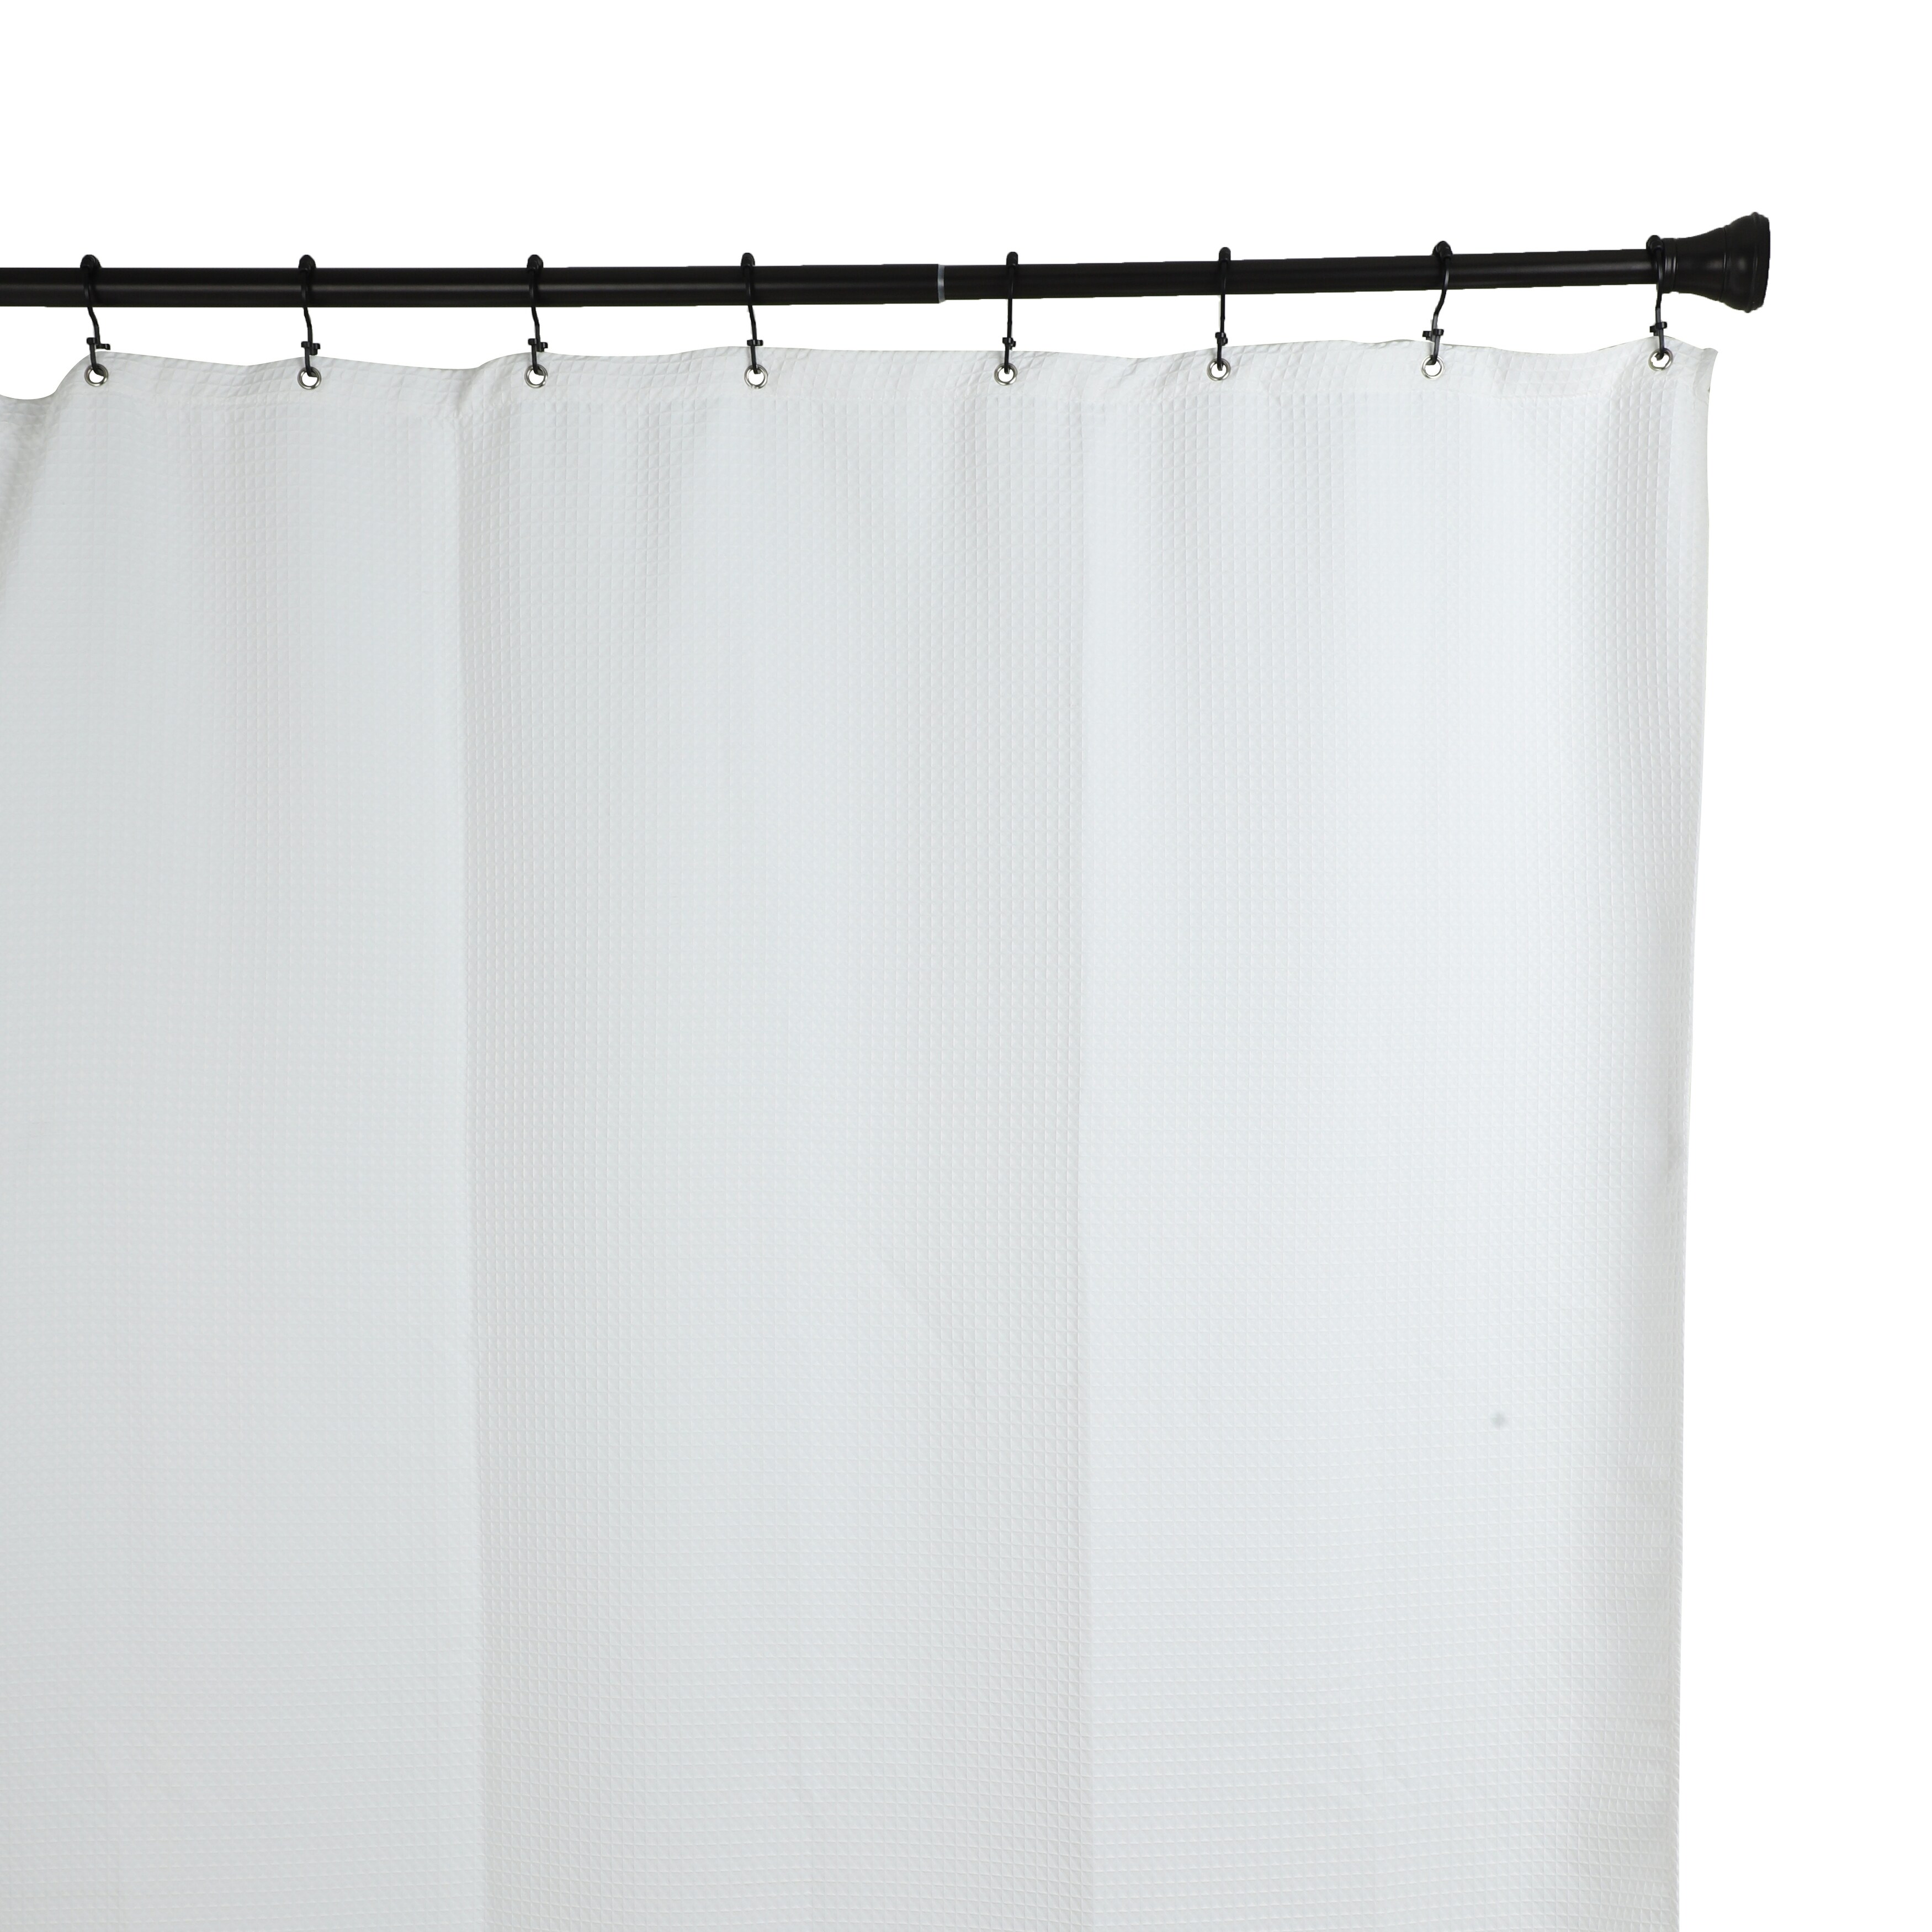 Utopia Alley HK7BK Ball Shower Curtain Hooks for Bathroom Shower Rods Curtains, Set of 12 - Black